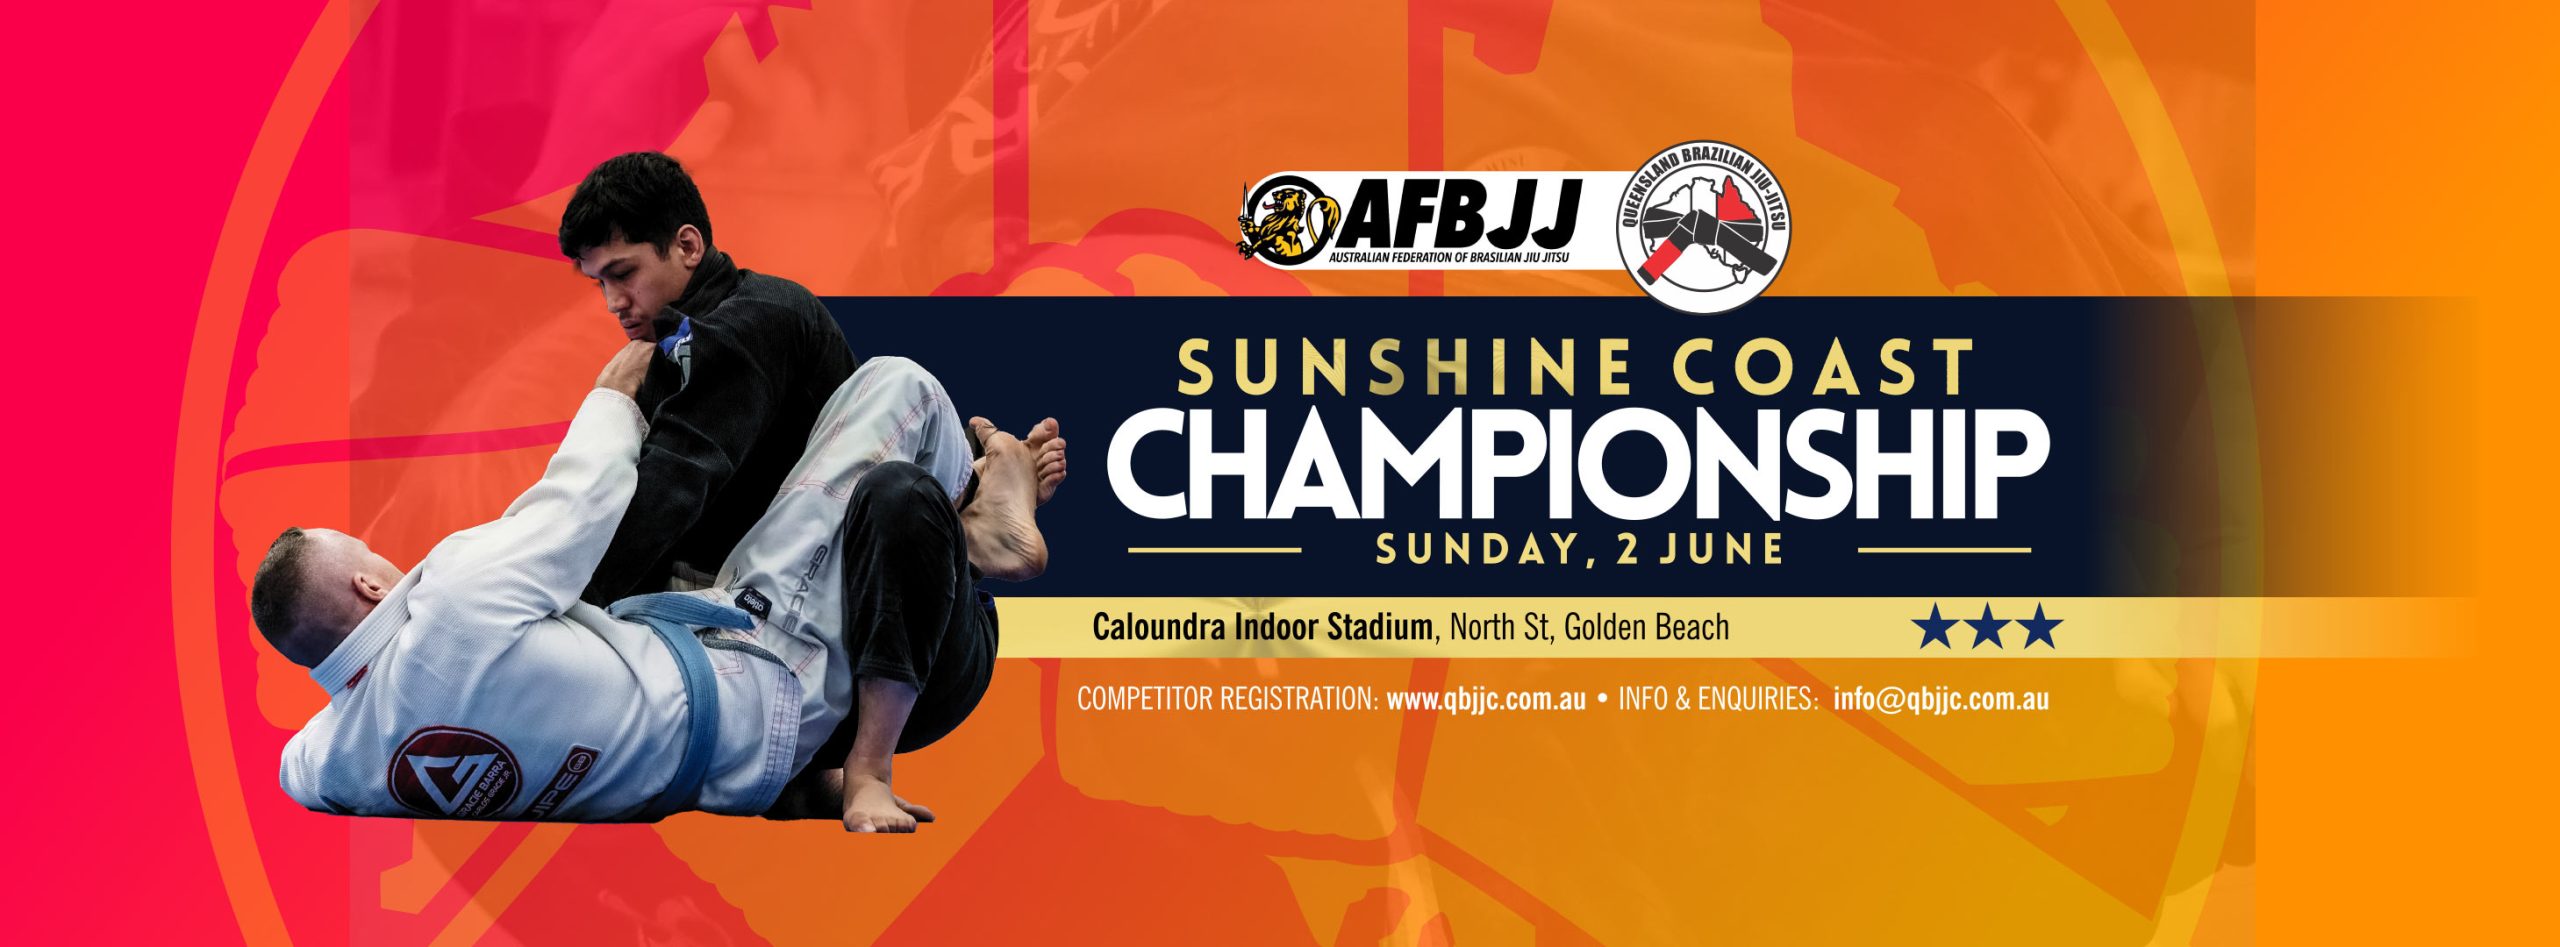 Sunshine Coast Championship